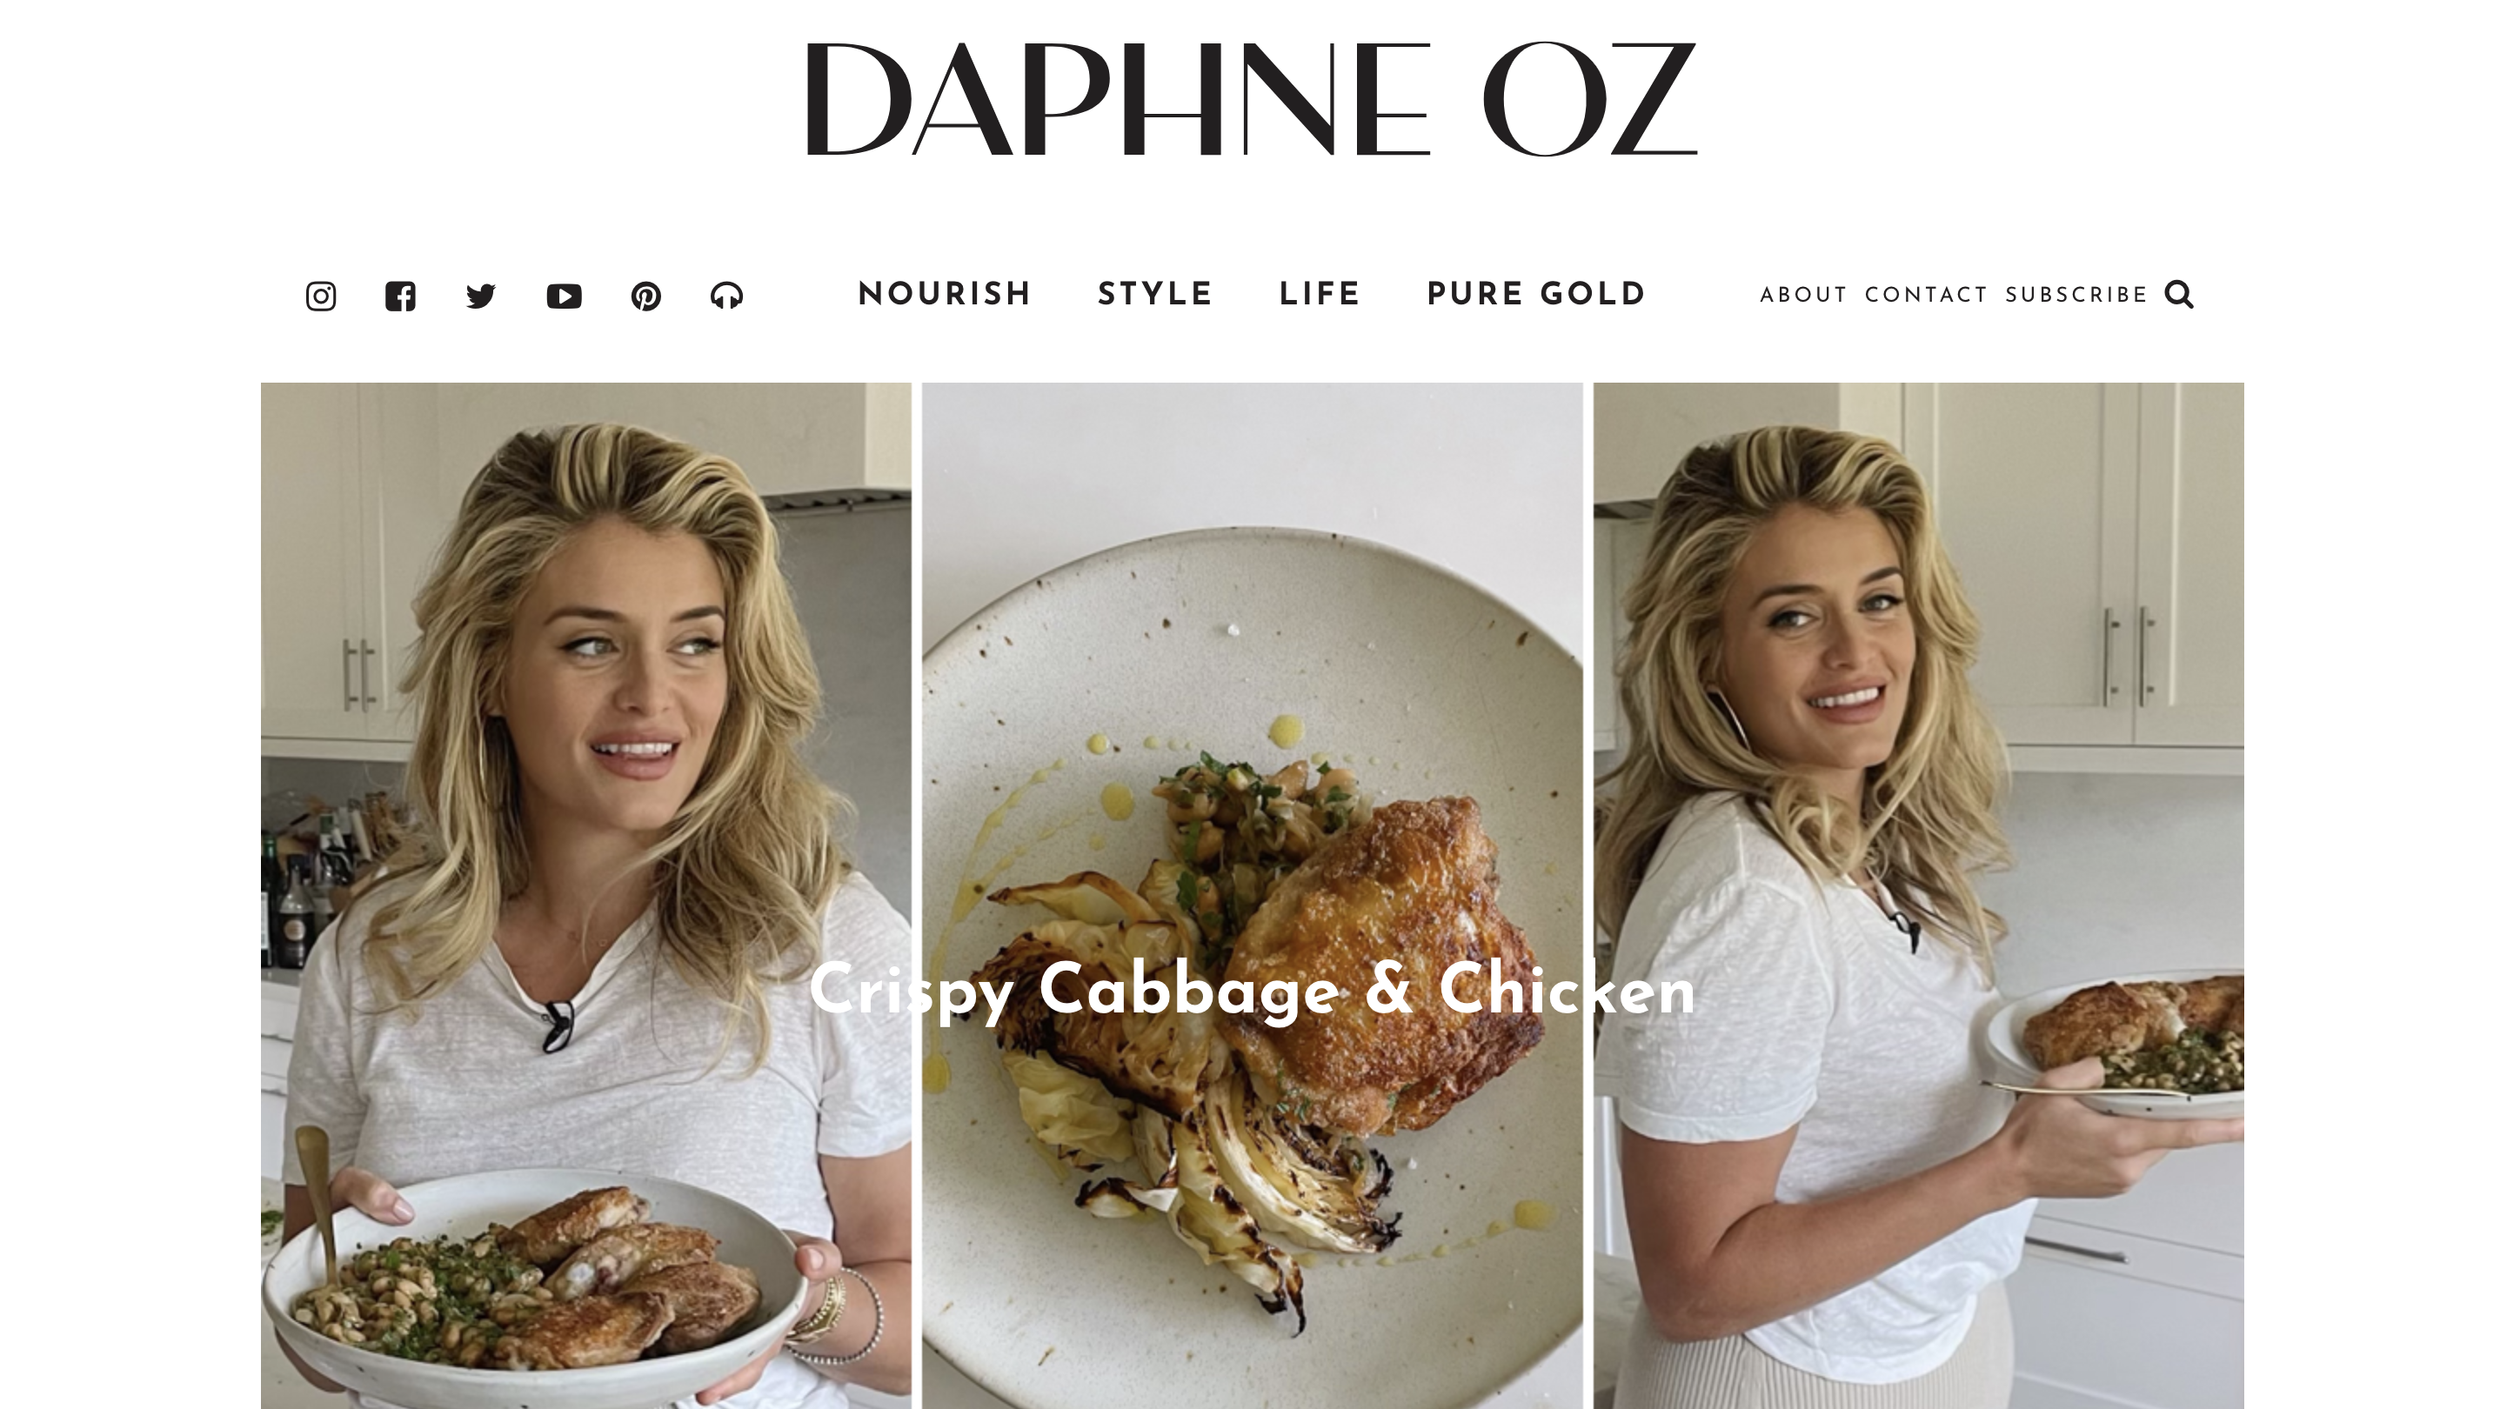 Daphne Oz